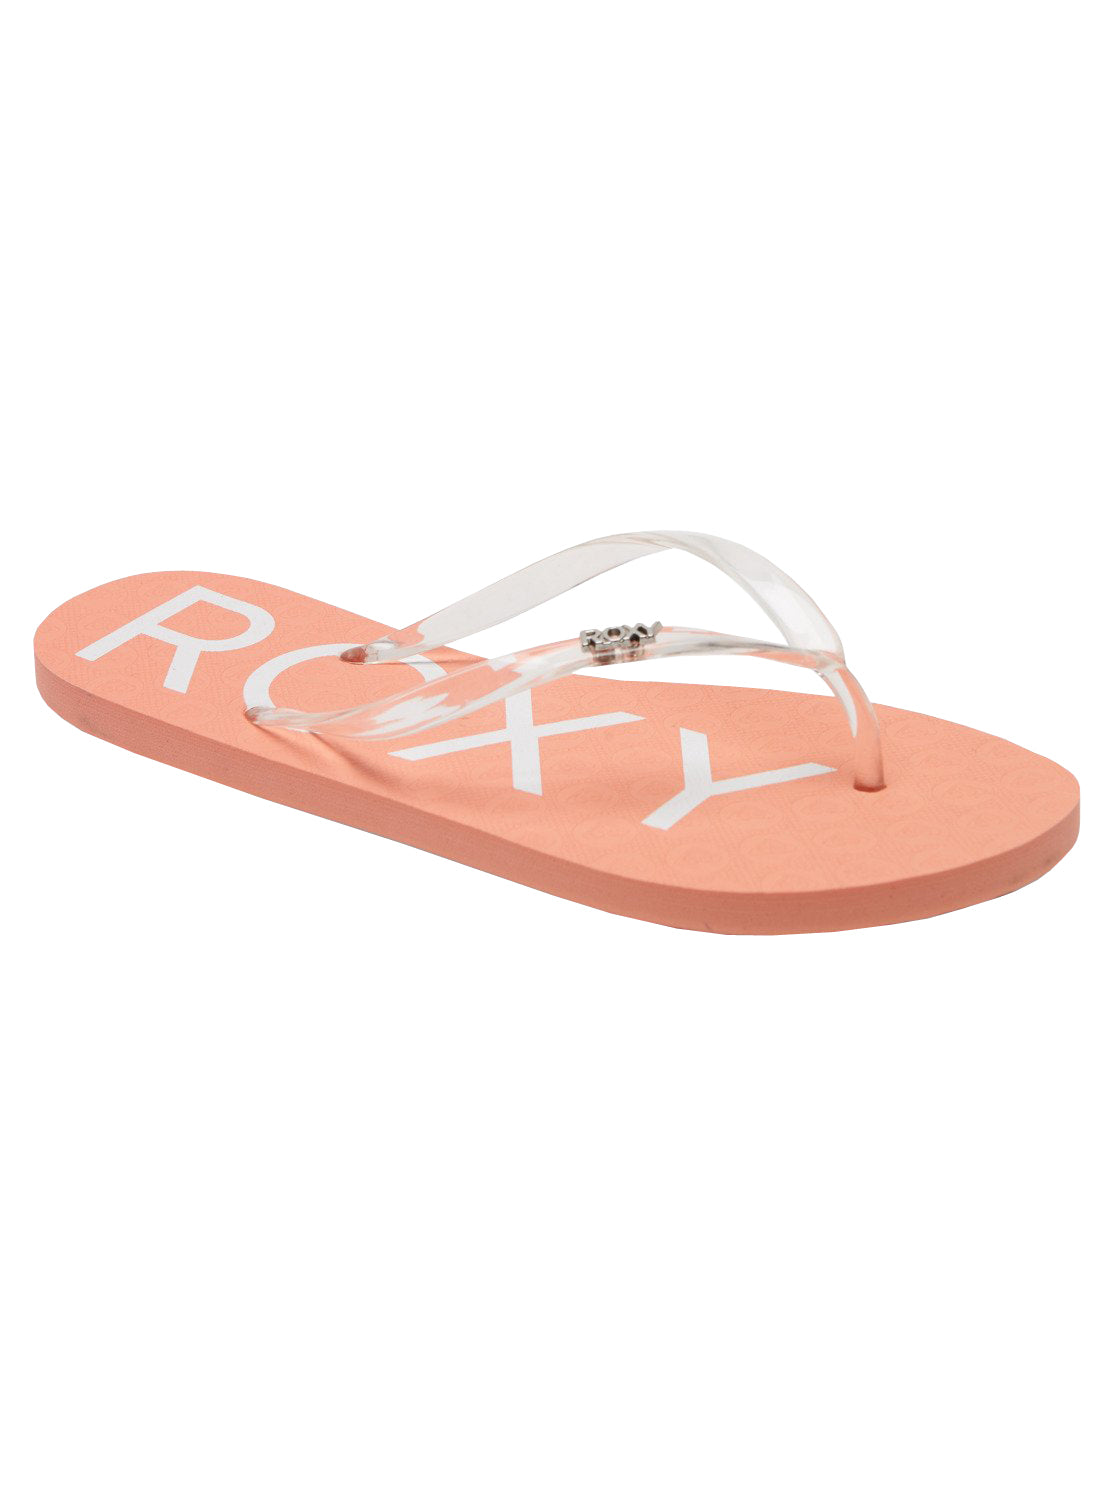 Roxy Viva Jelly Womens Sandal HCO-Hot Coral 6